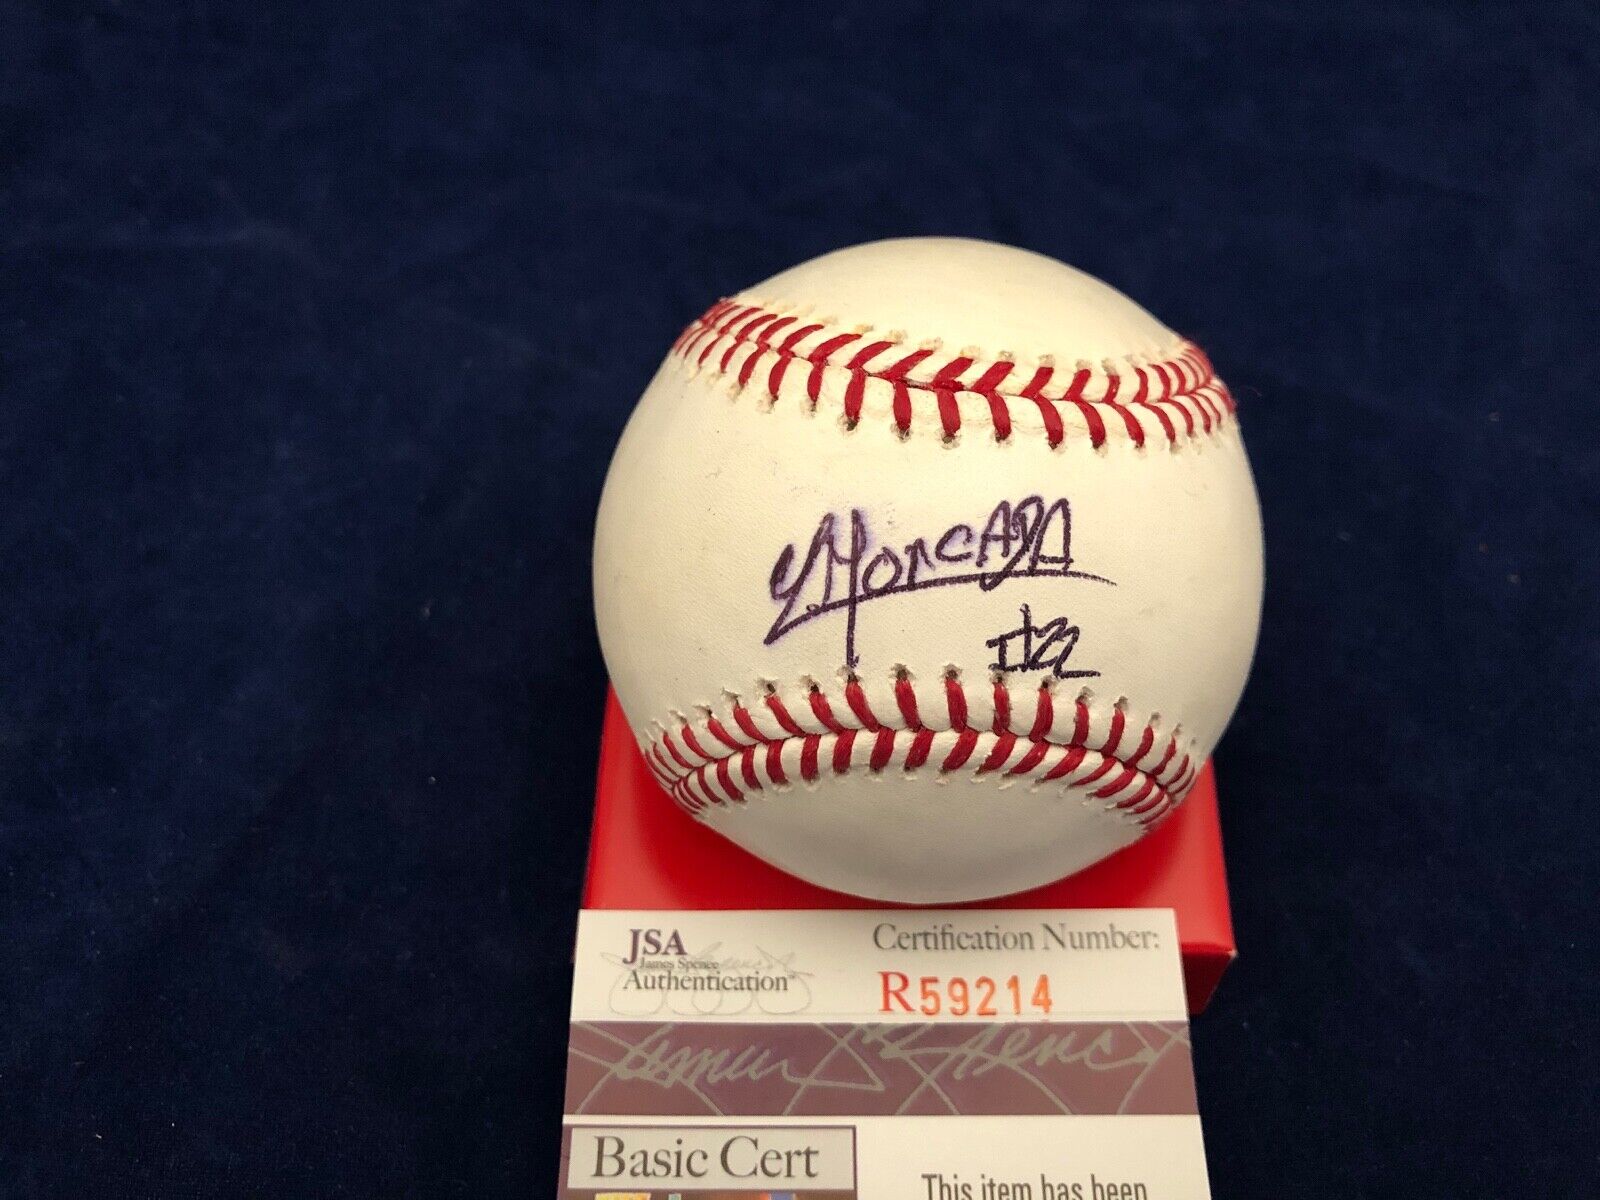 Yoan Moncada WHITE SOX autographed Signed baseball JSA R59214